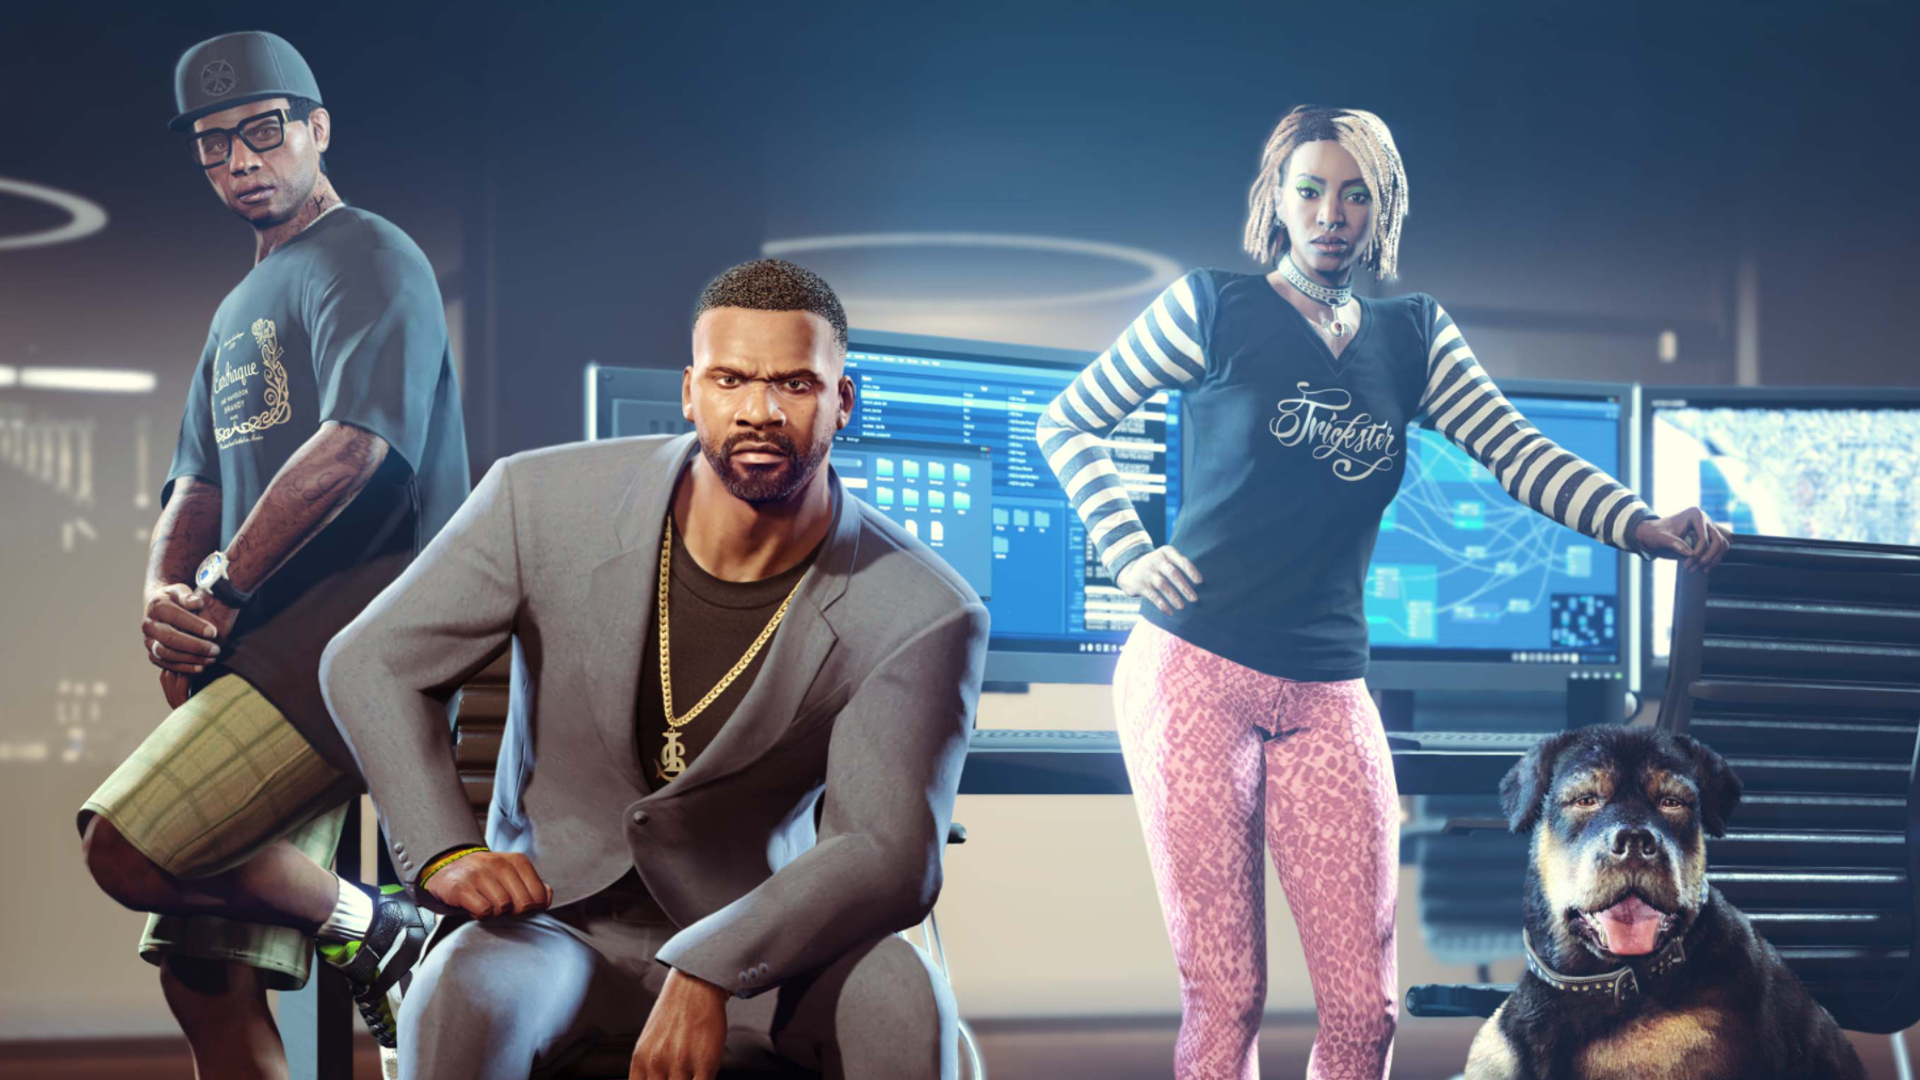  GTA Online update will debut new Dr. Dre music, bring back Franklin 